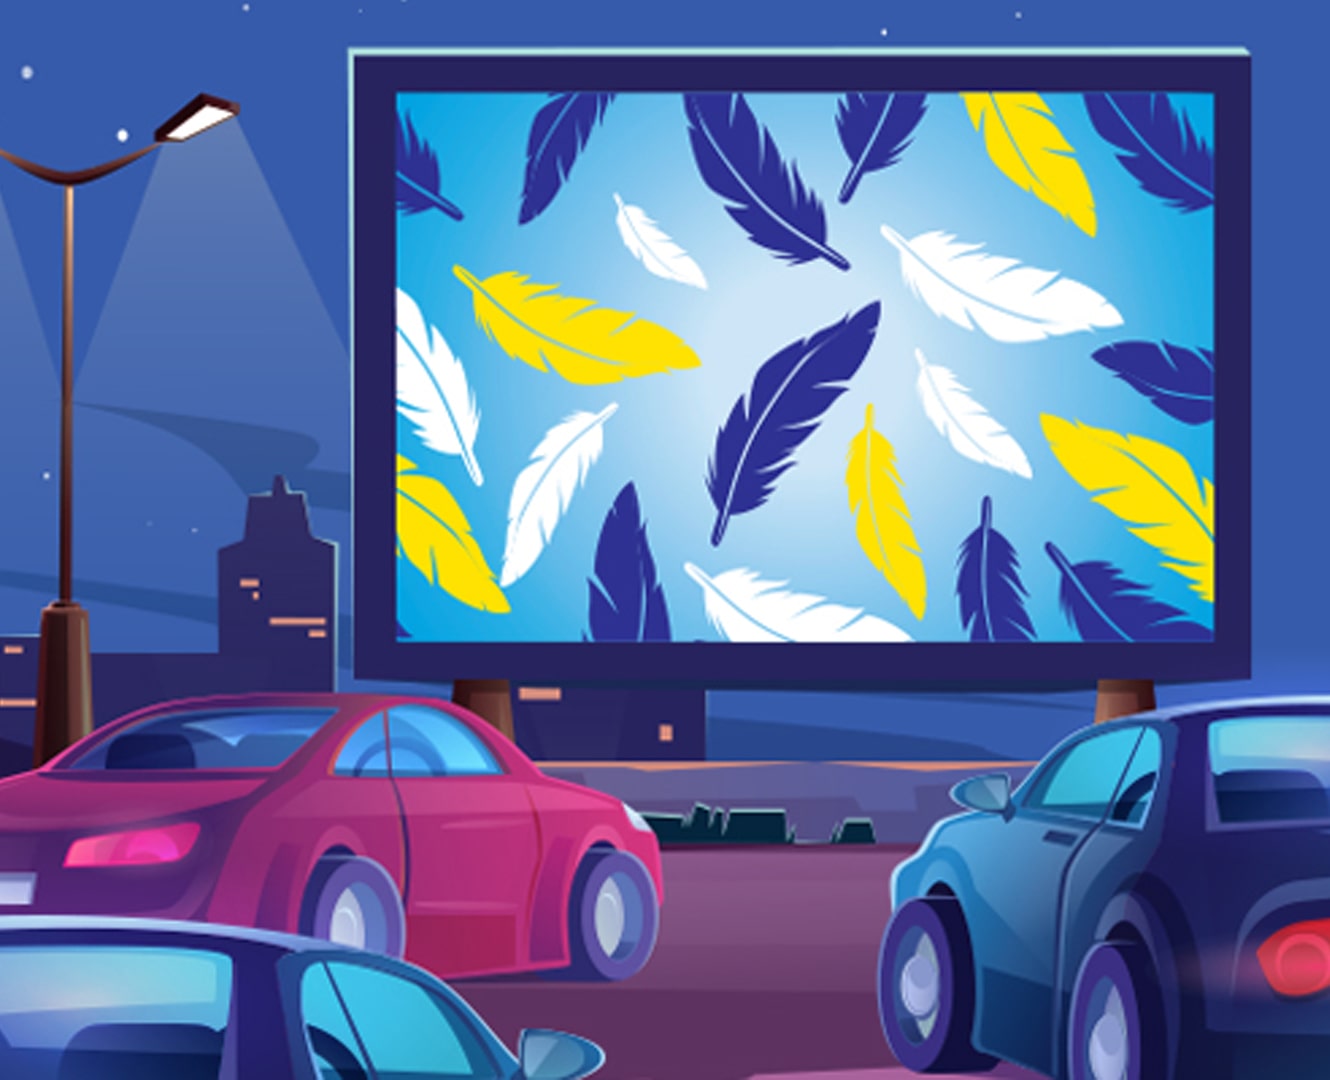 Drive in movie cartoon image